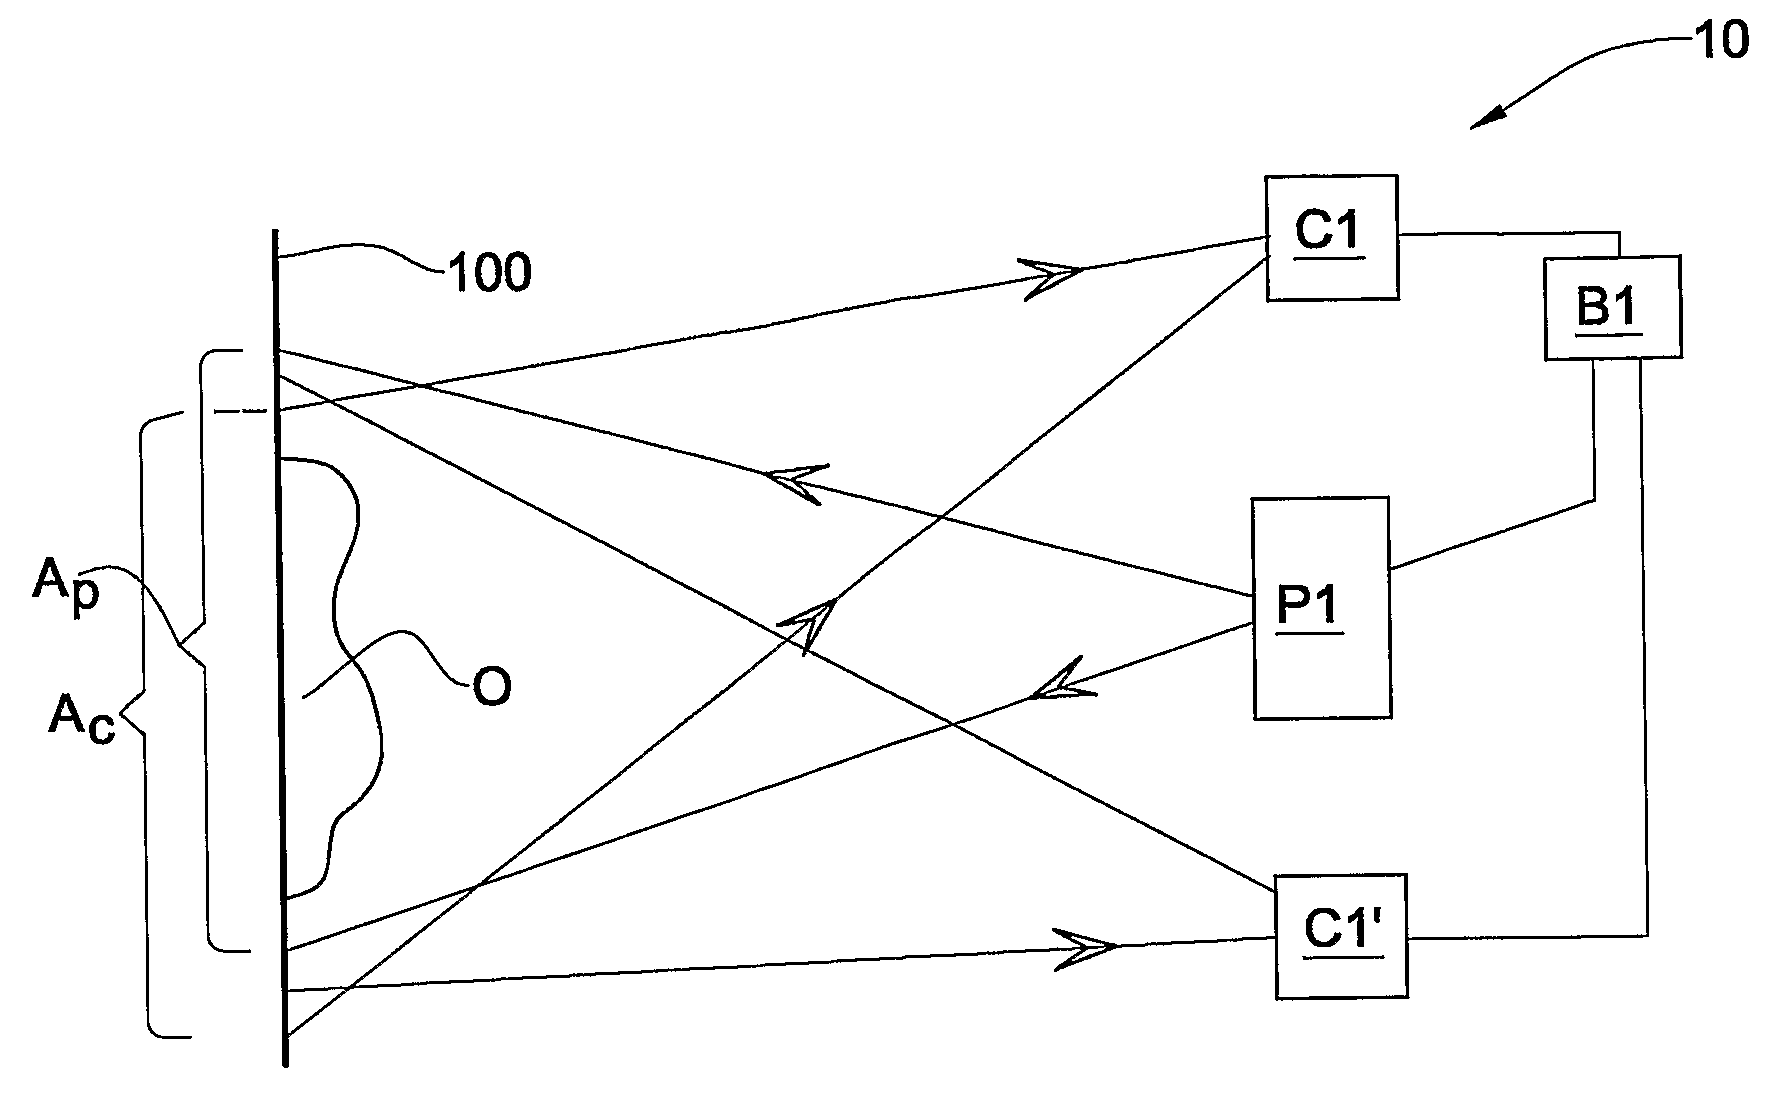 Method and System for Illumination Adjustment